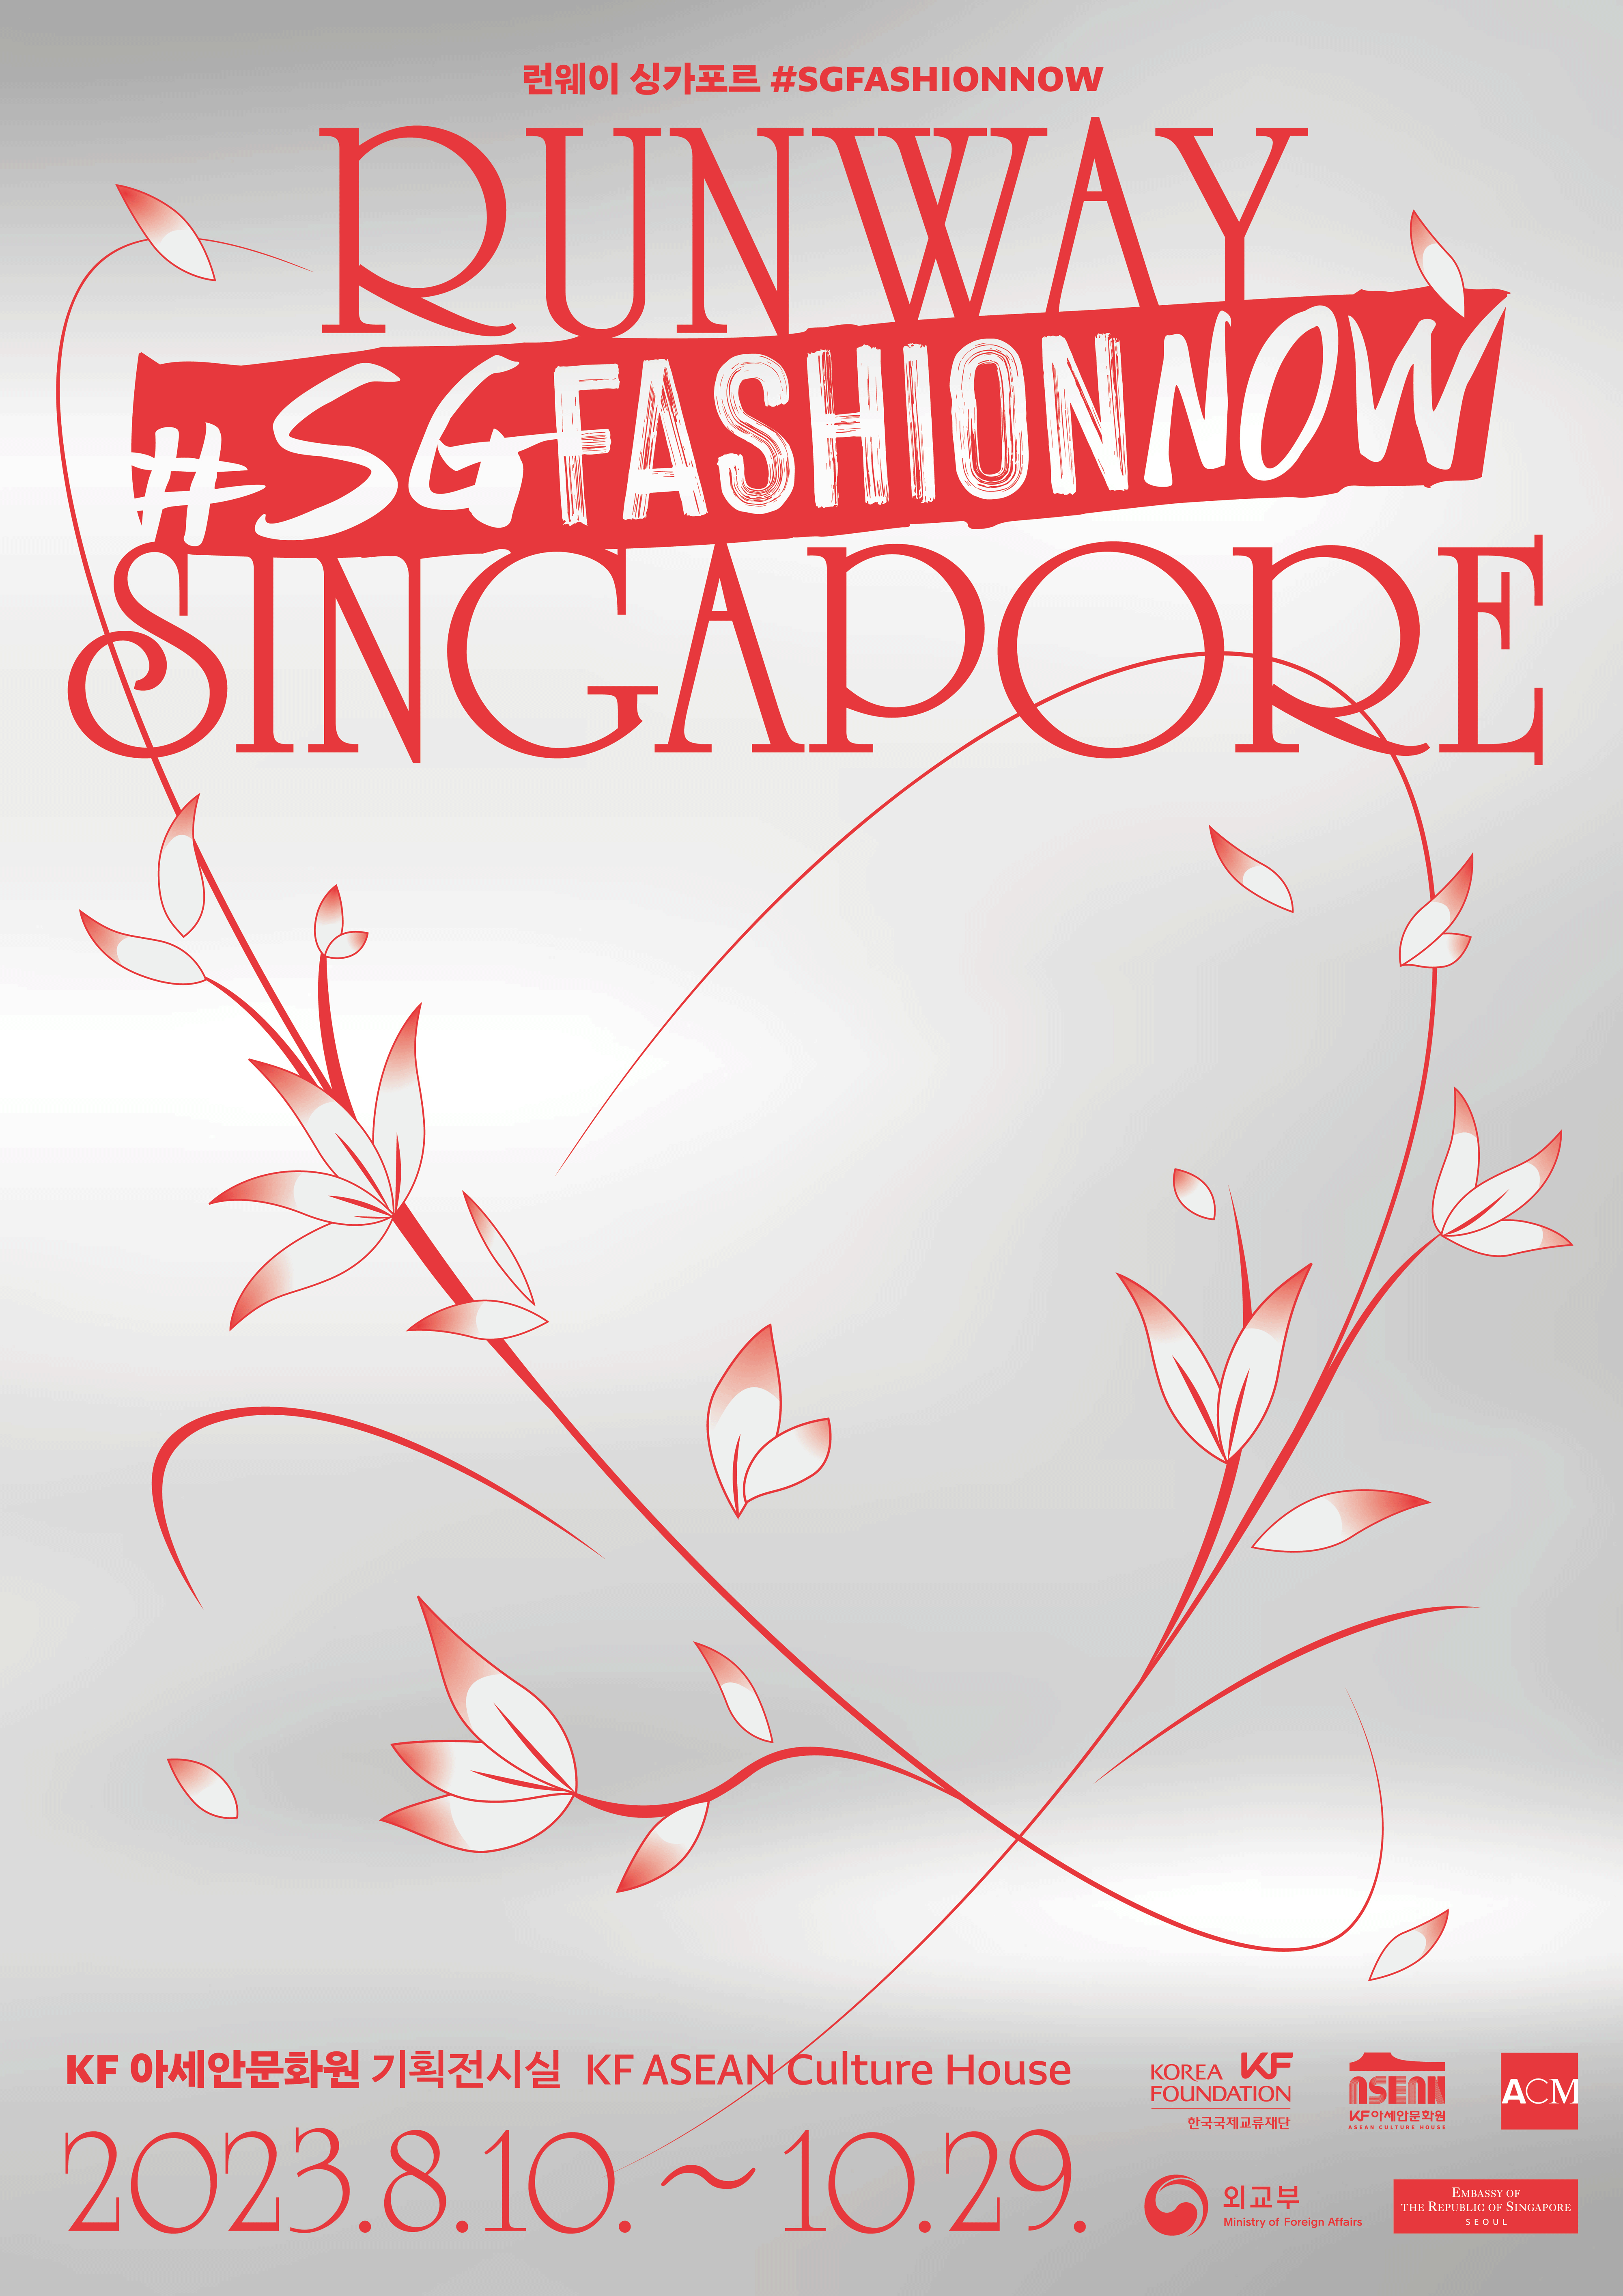 Runway Singapore #SGFASHIONNOW